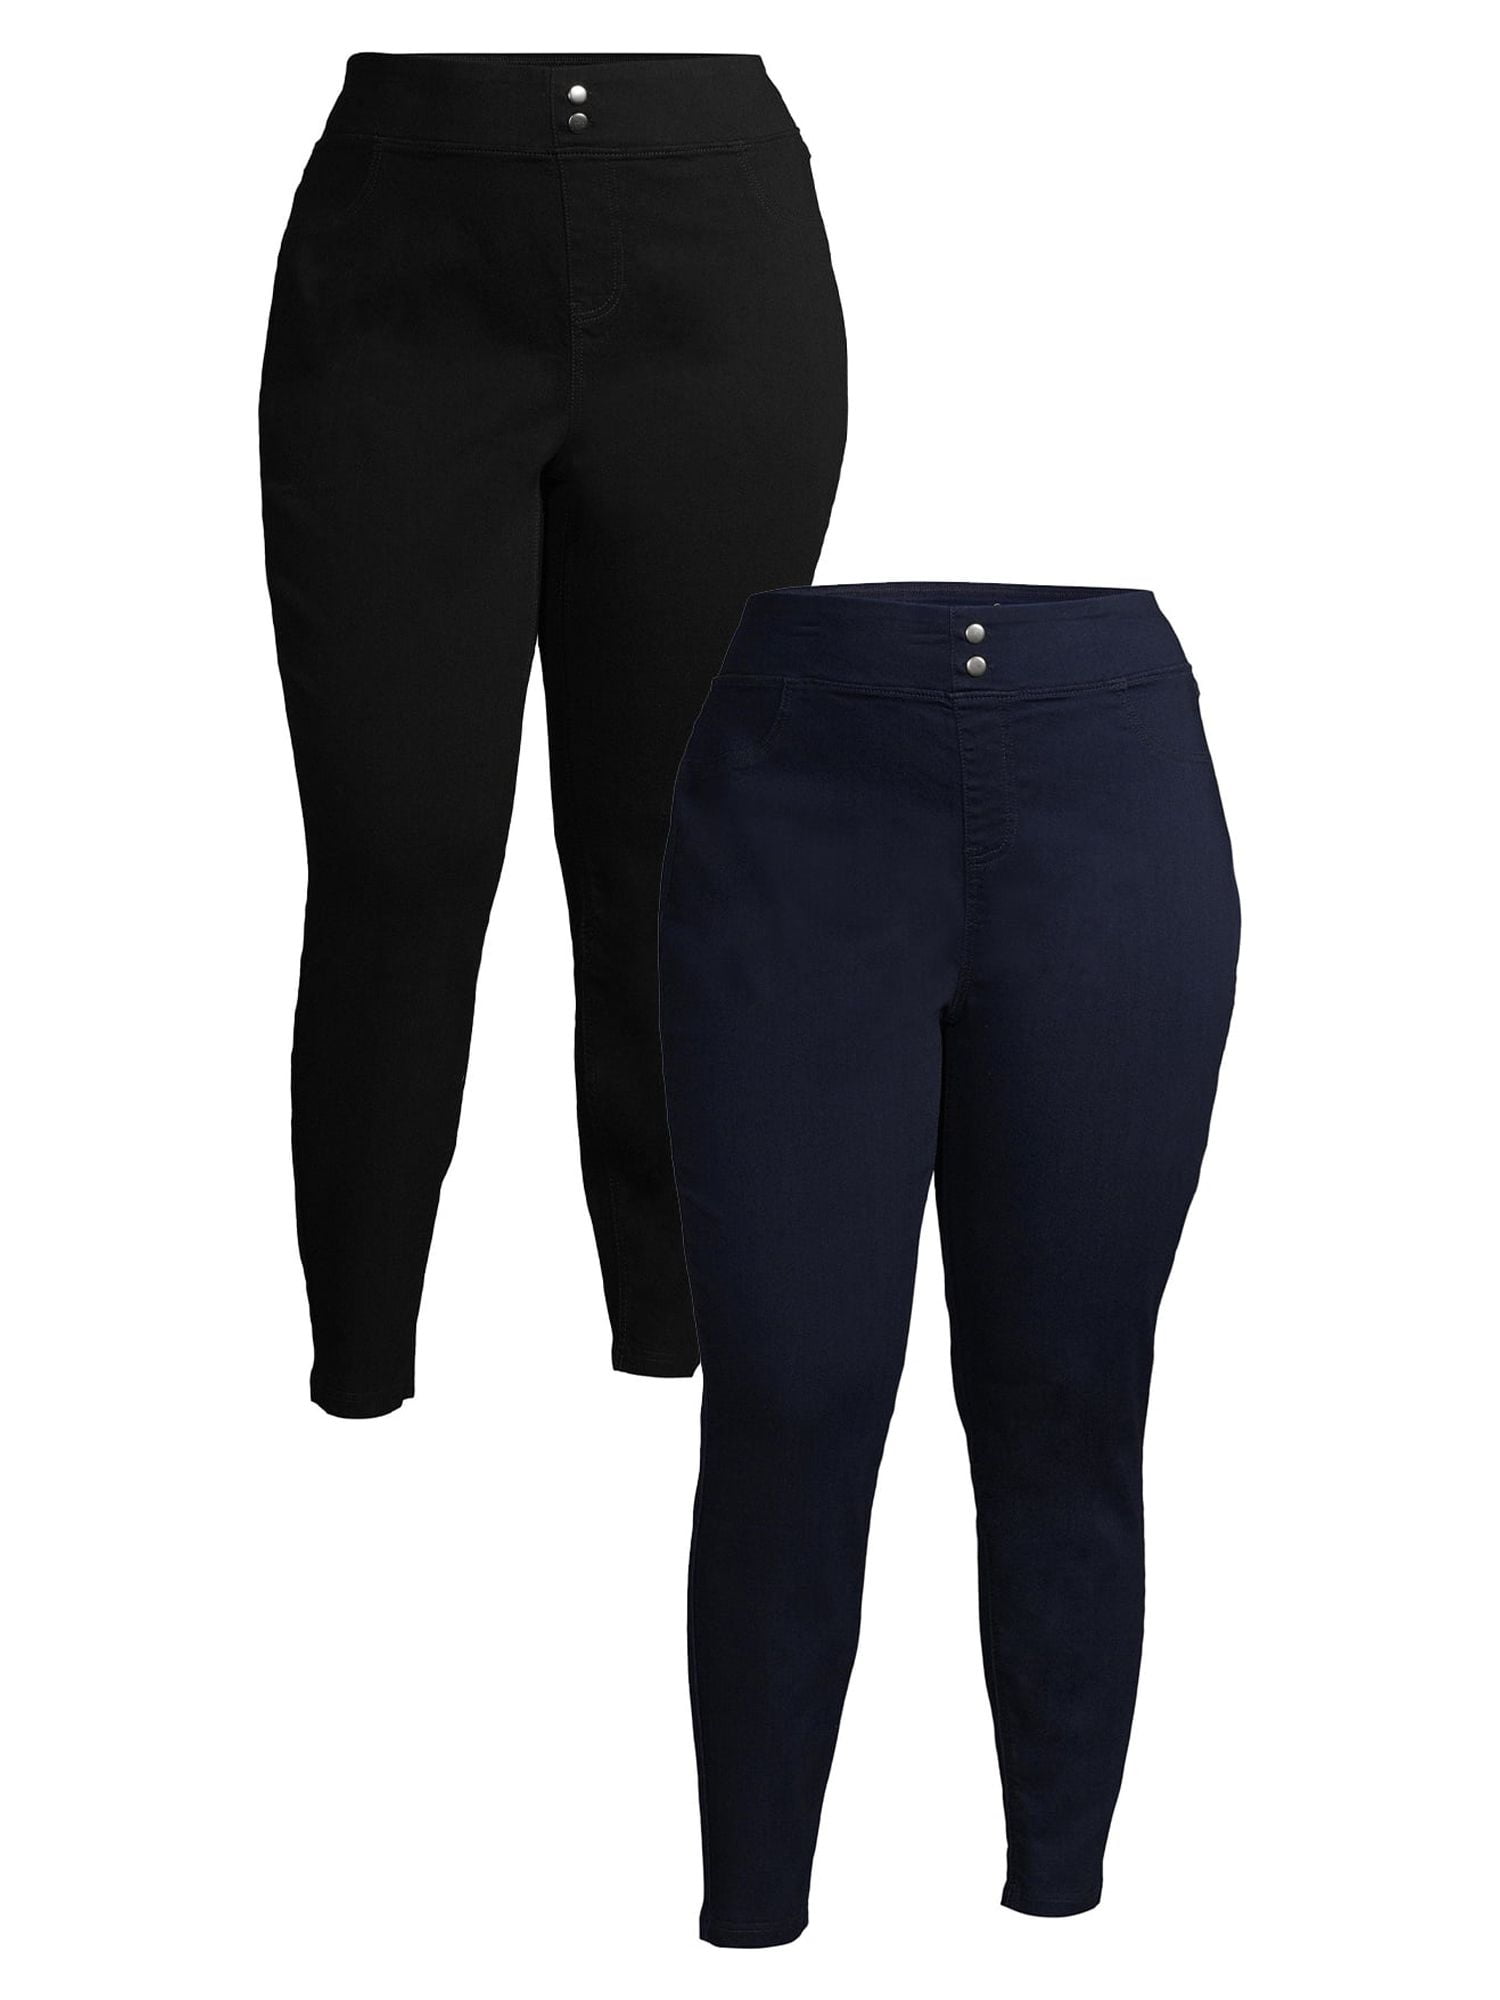 Terra & Sky Women's Plus Size Pull On Jegging Jean, 2-pack